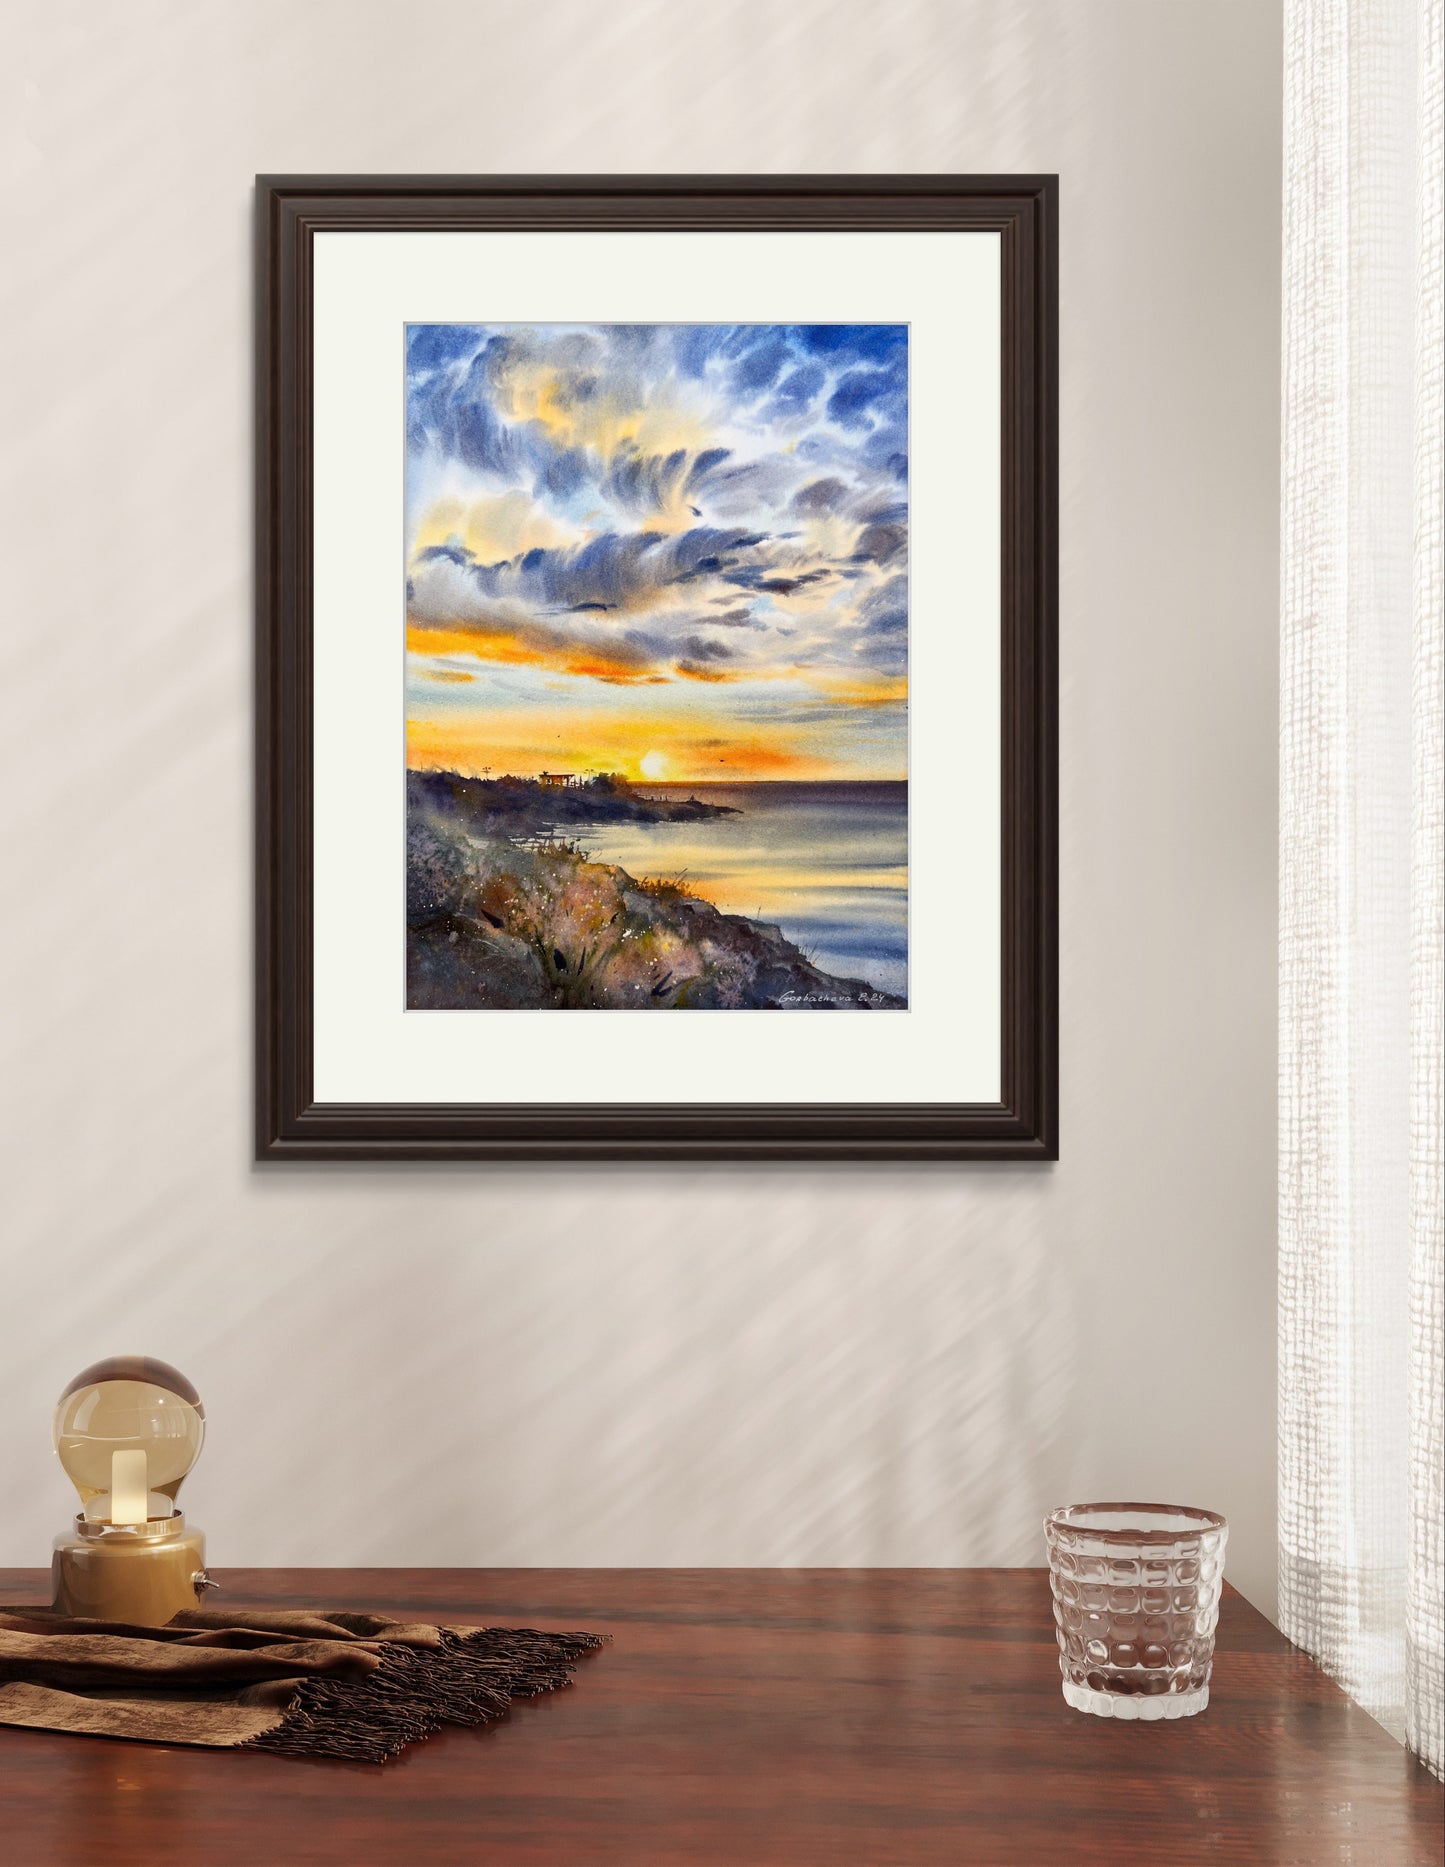 Sunset in Cyprus Coastal Landscape - Original Watercolor Painting